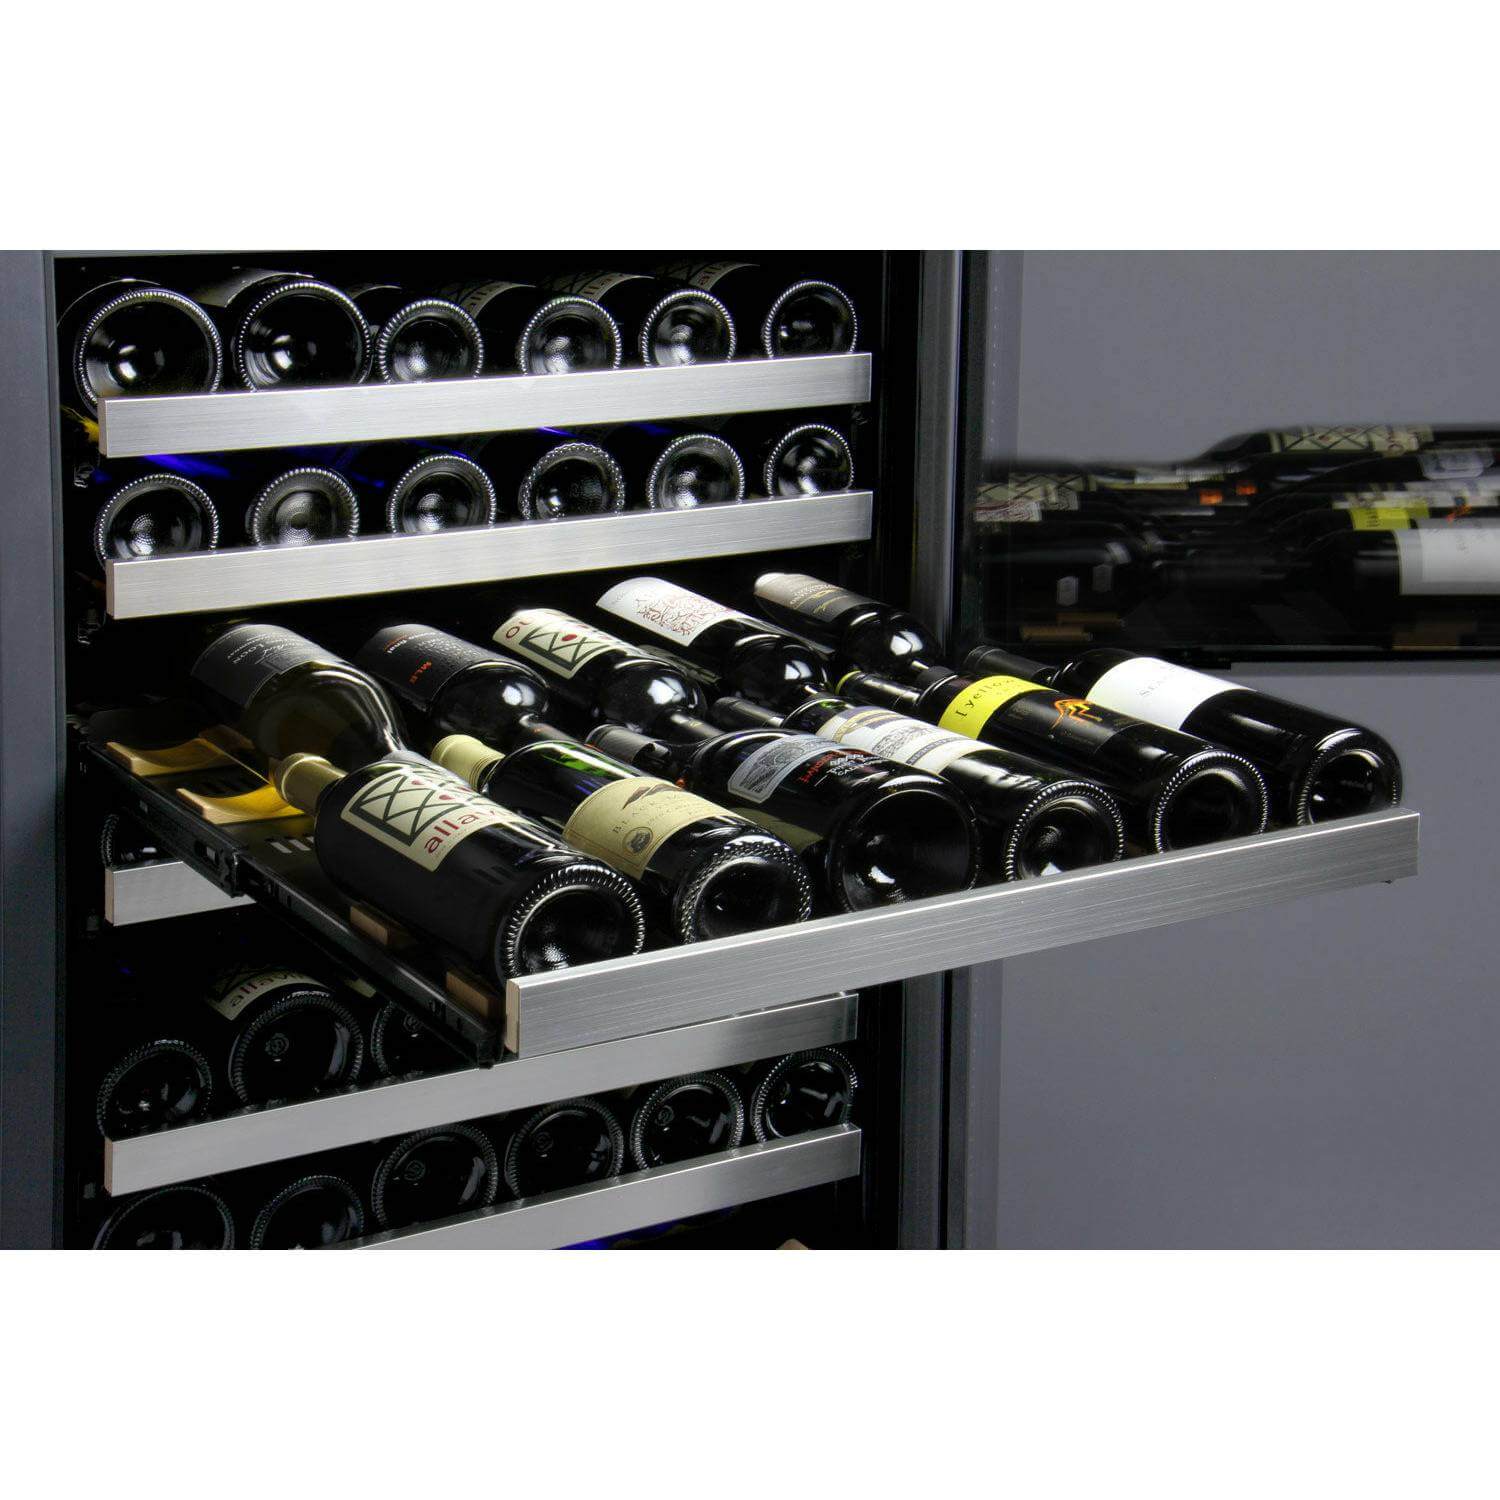 Allavino 24" Wide FlexCount II Tru-Vino 128 Bottle Single Zone Stainless Steel Wine Refrigerator